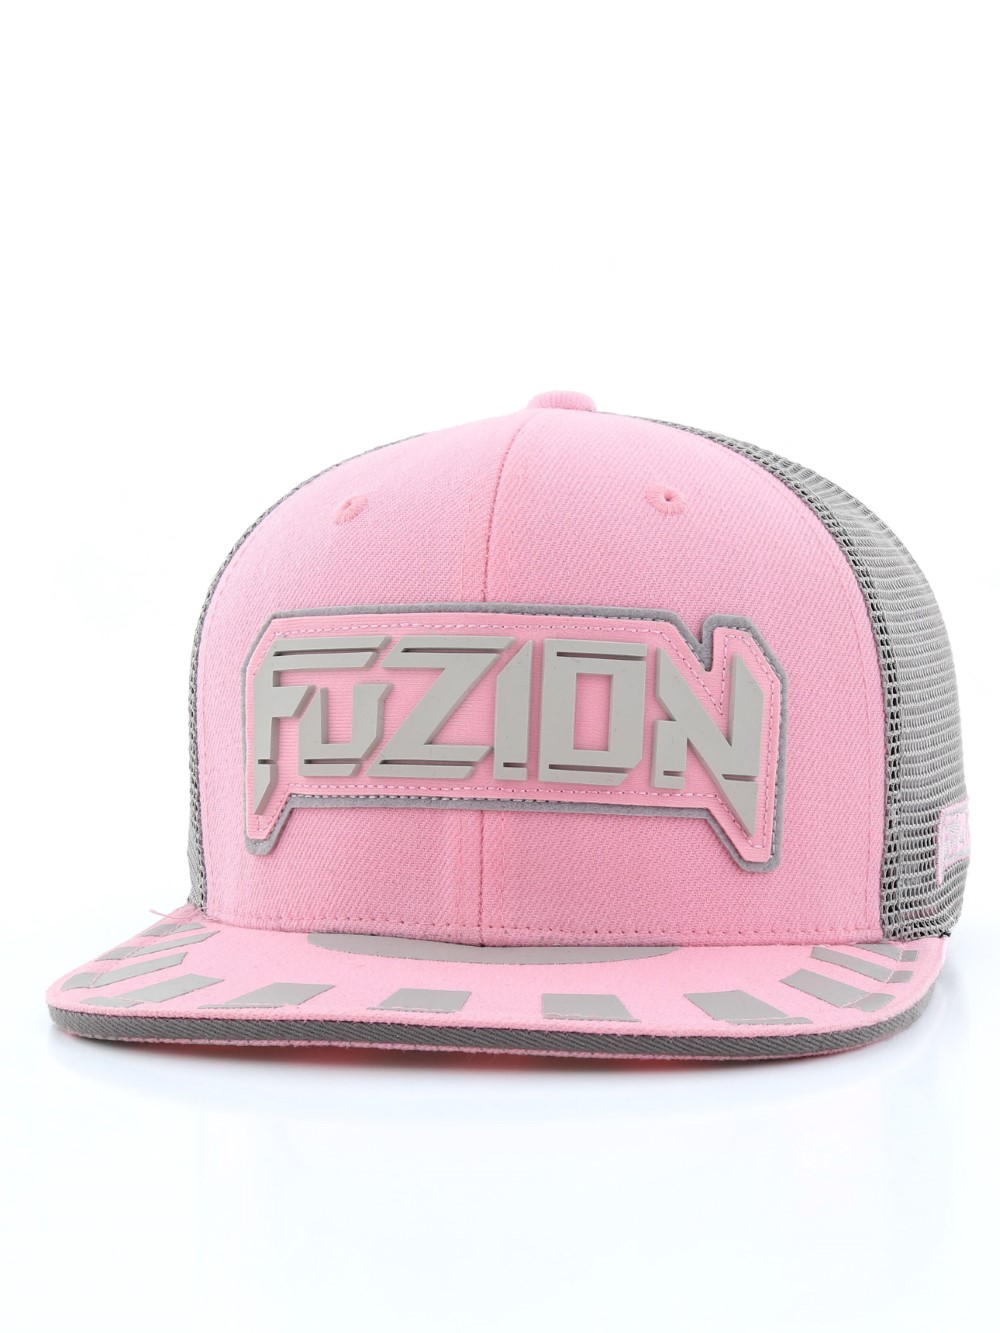 Fuzion Xtreme Snapback Women's Trucker Cap Pink/Gray